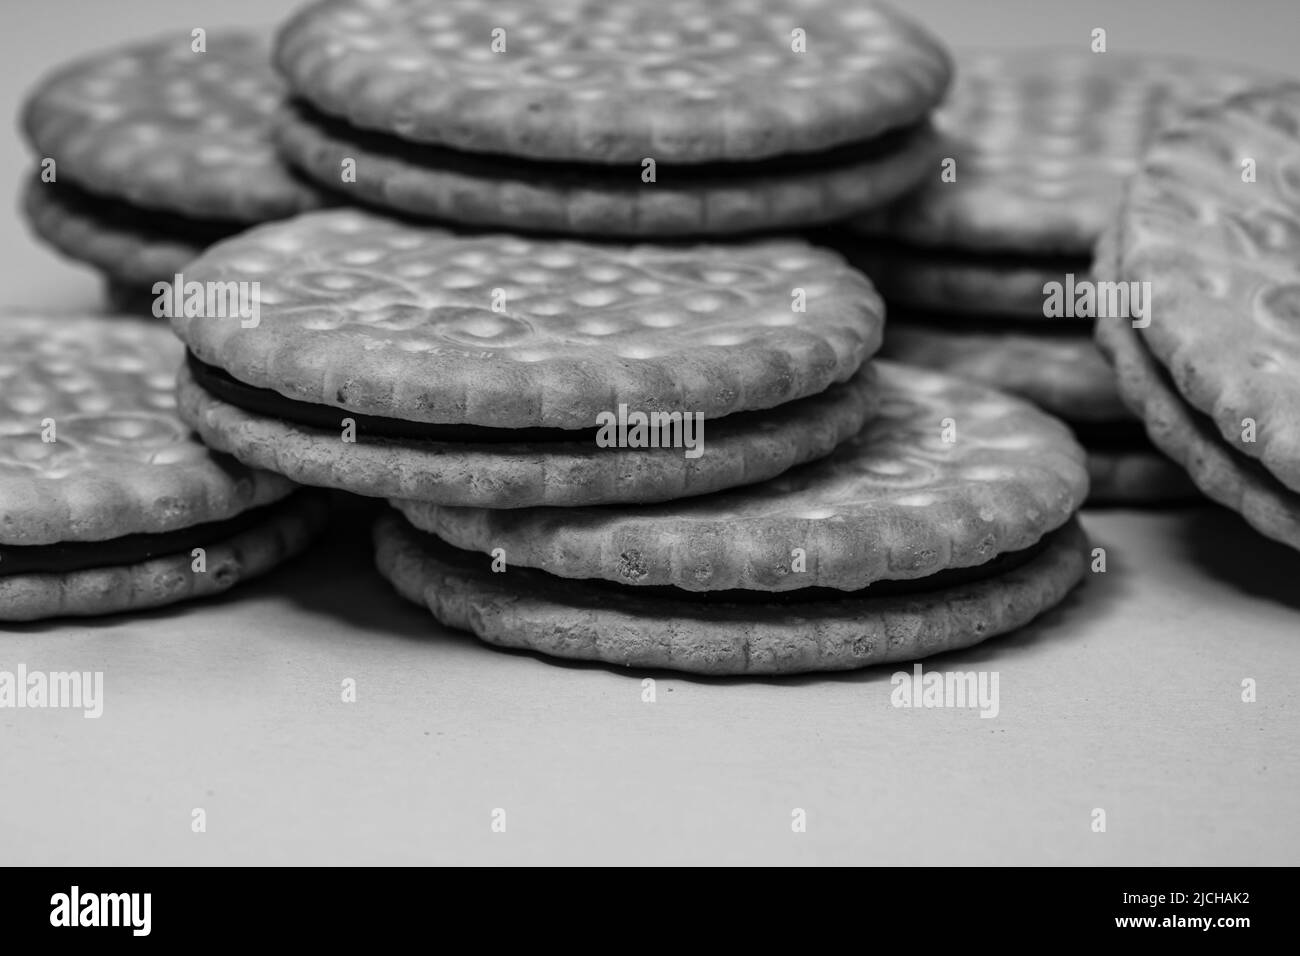 Round biscuits with chocolate cream, sandwich biscuits with chocolate filling Stock Photo